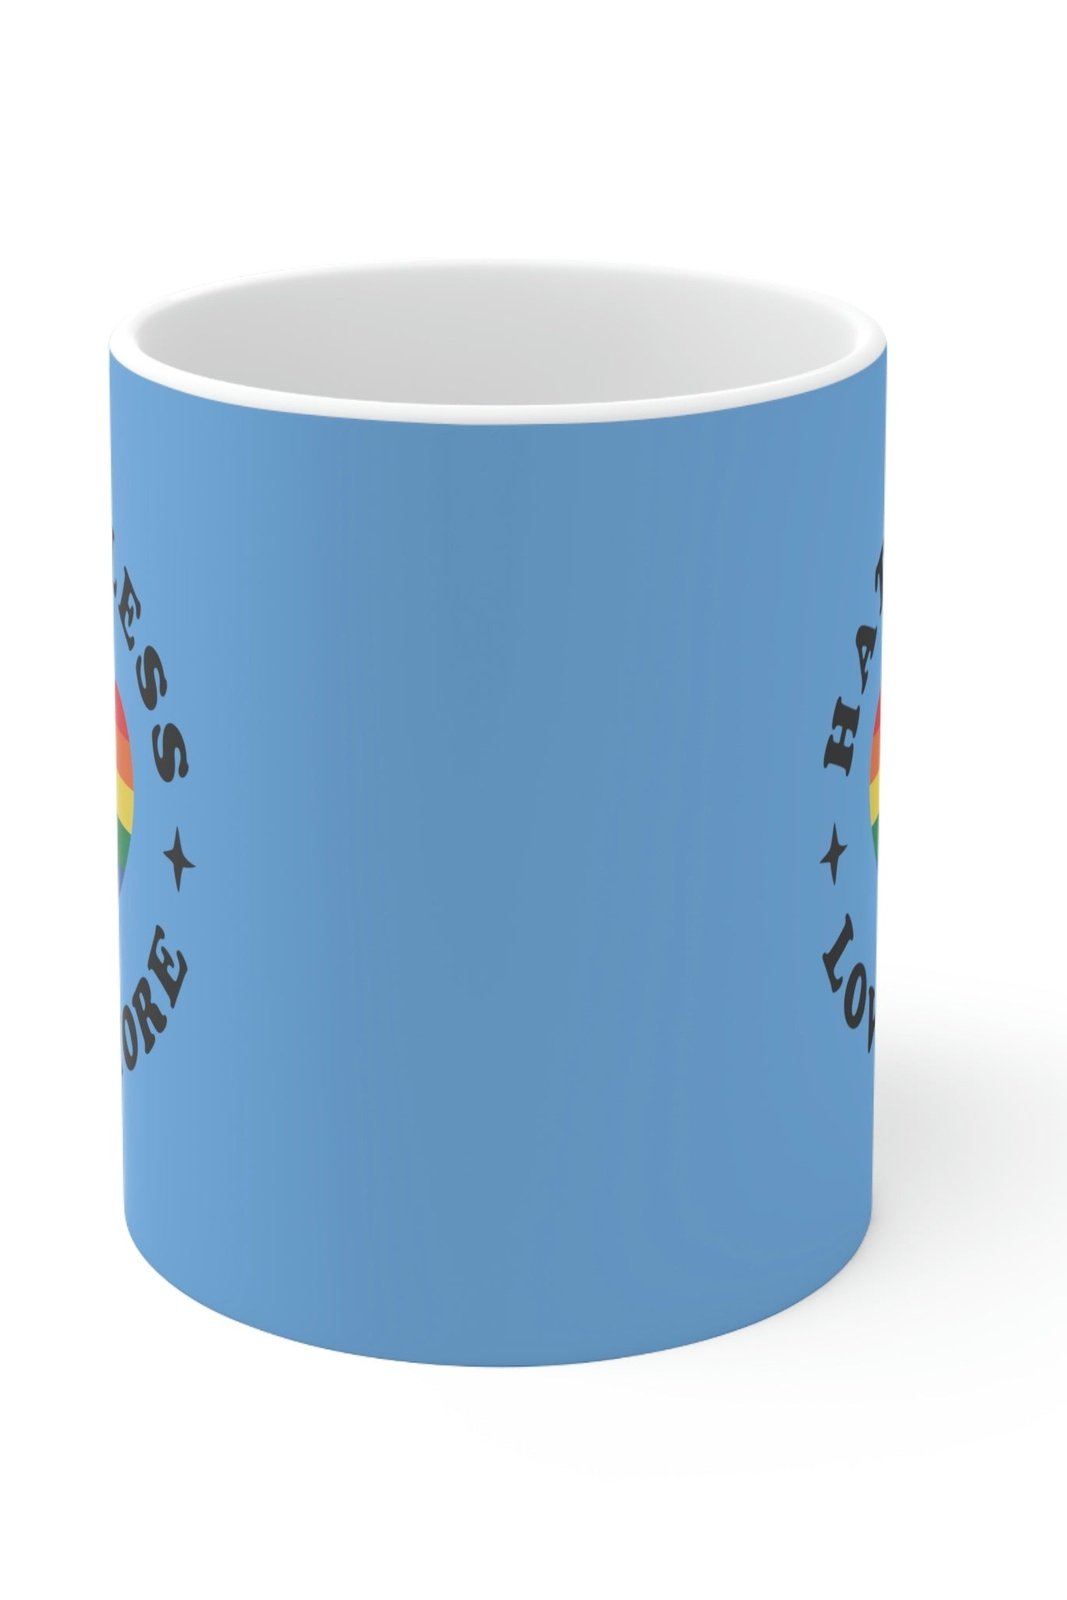 Hate Less Love More (blue)  Ceramic Mug 11oz